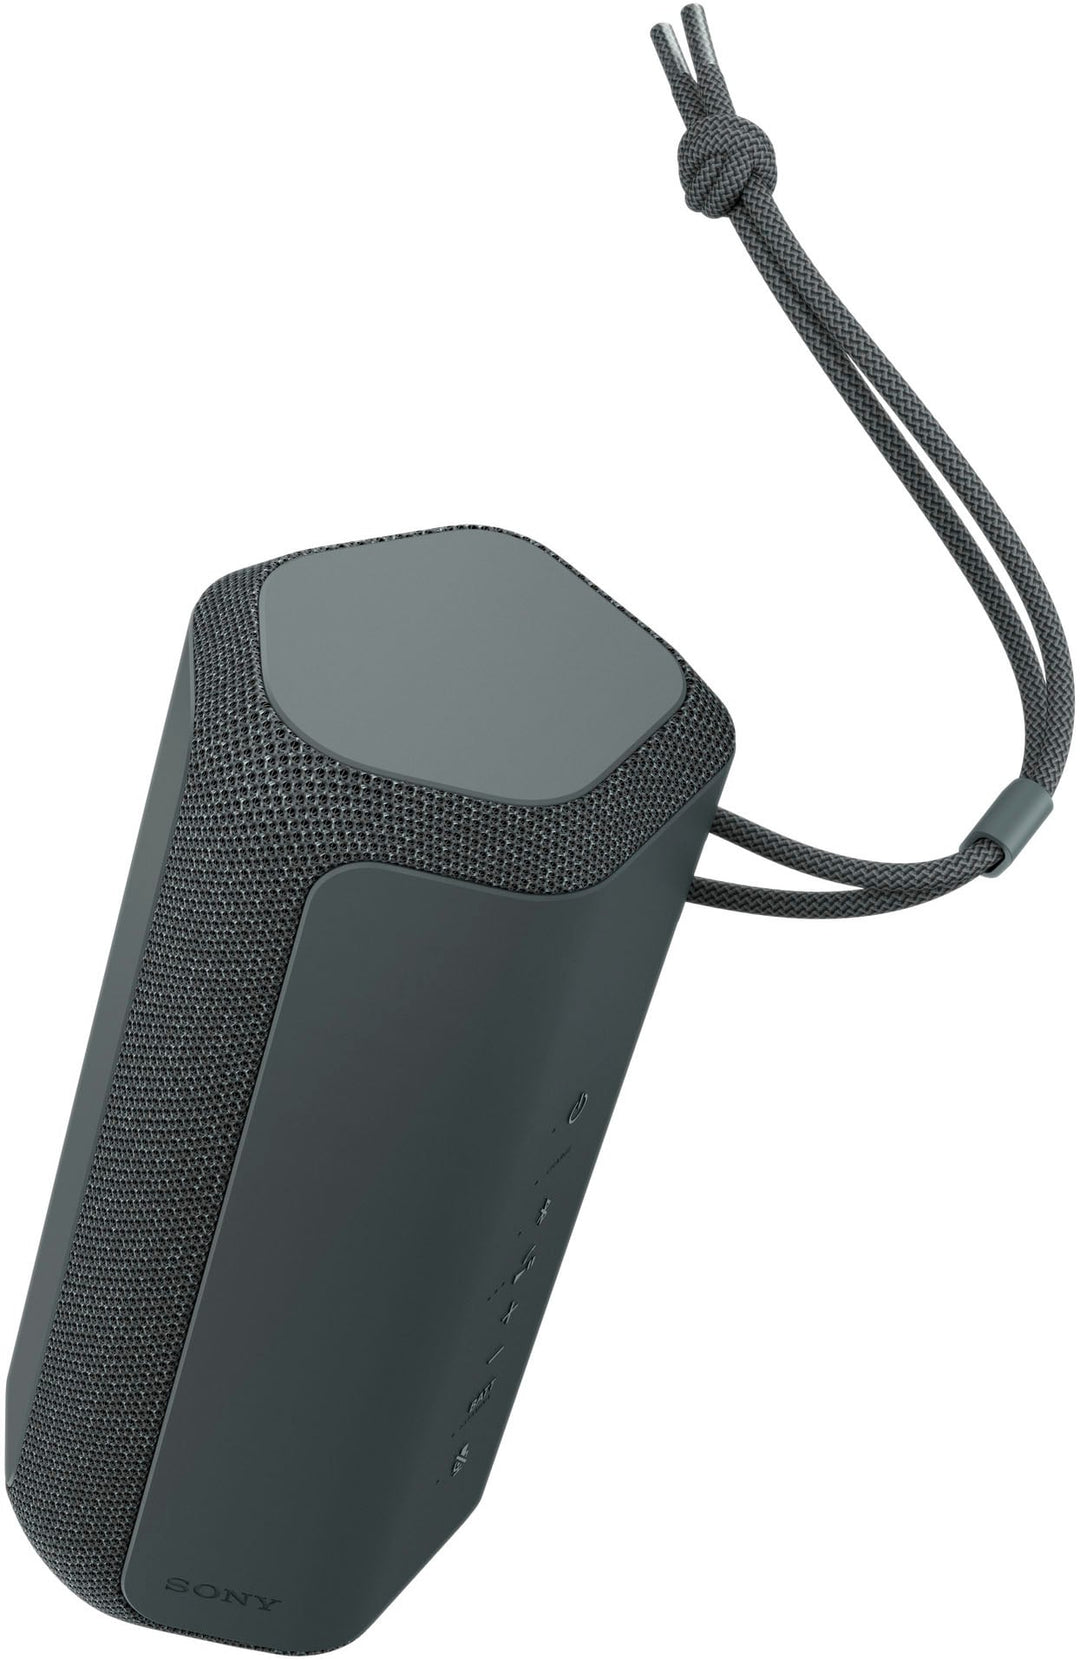 Sony - SRSXE200 Portable X-Series Bluetooth Speaker - Black_8